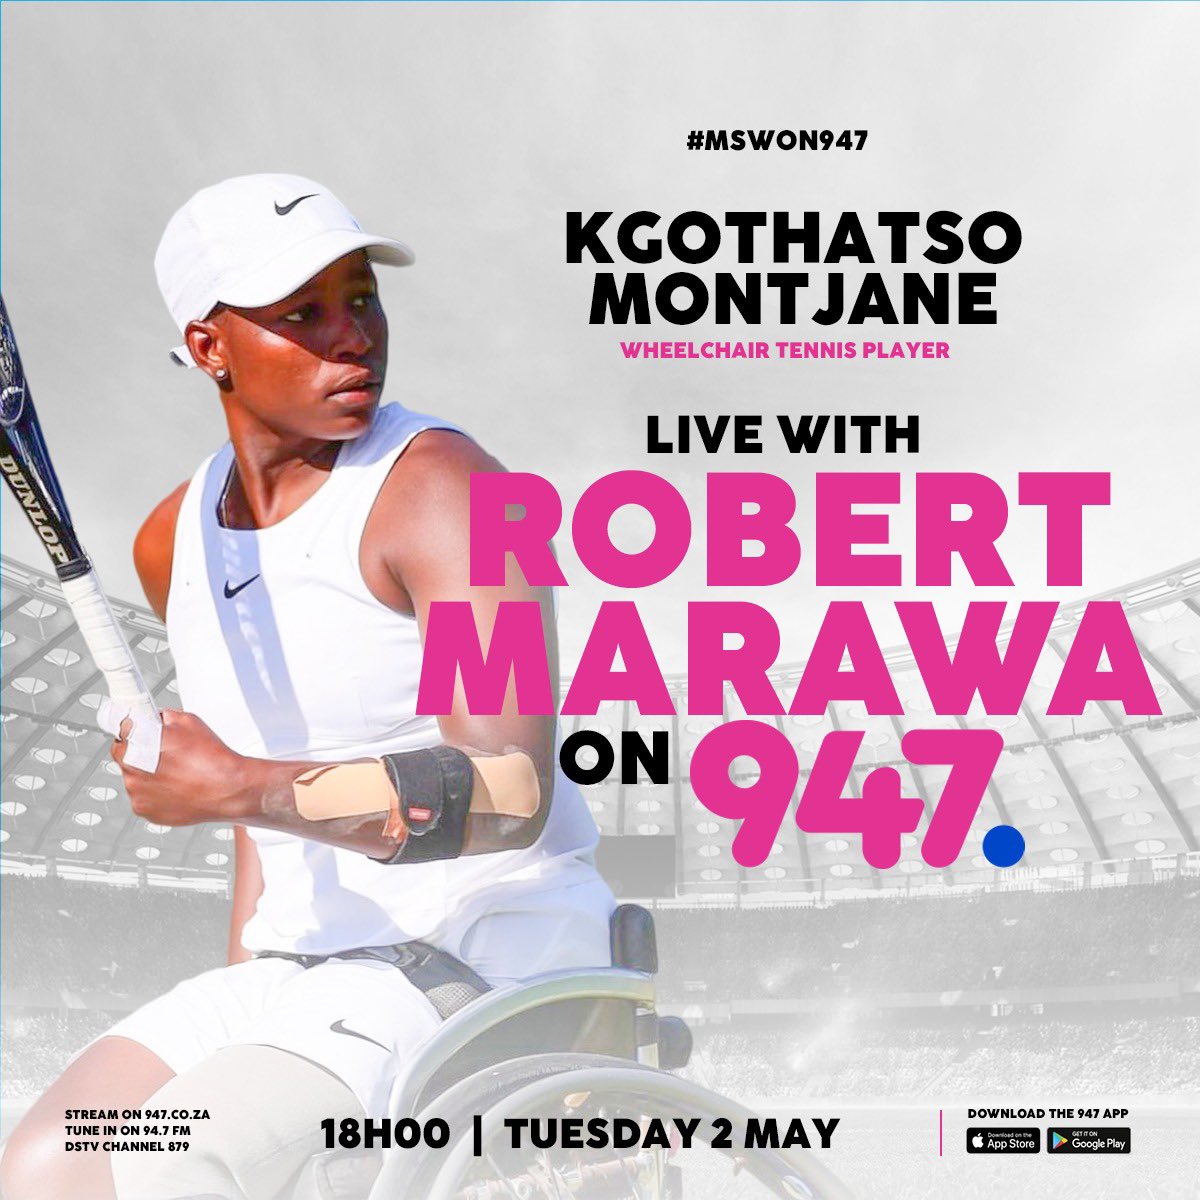 Listen to @KGmontjane1 this evening on @robertmarawa on #94.7